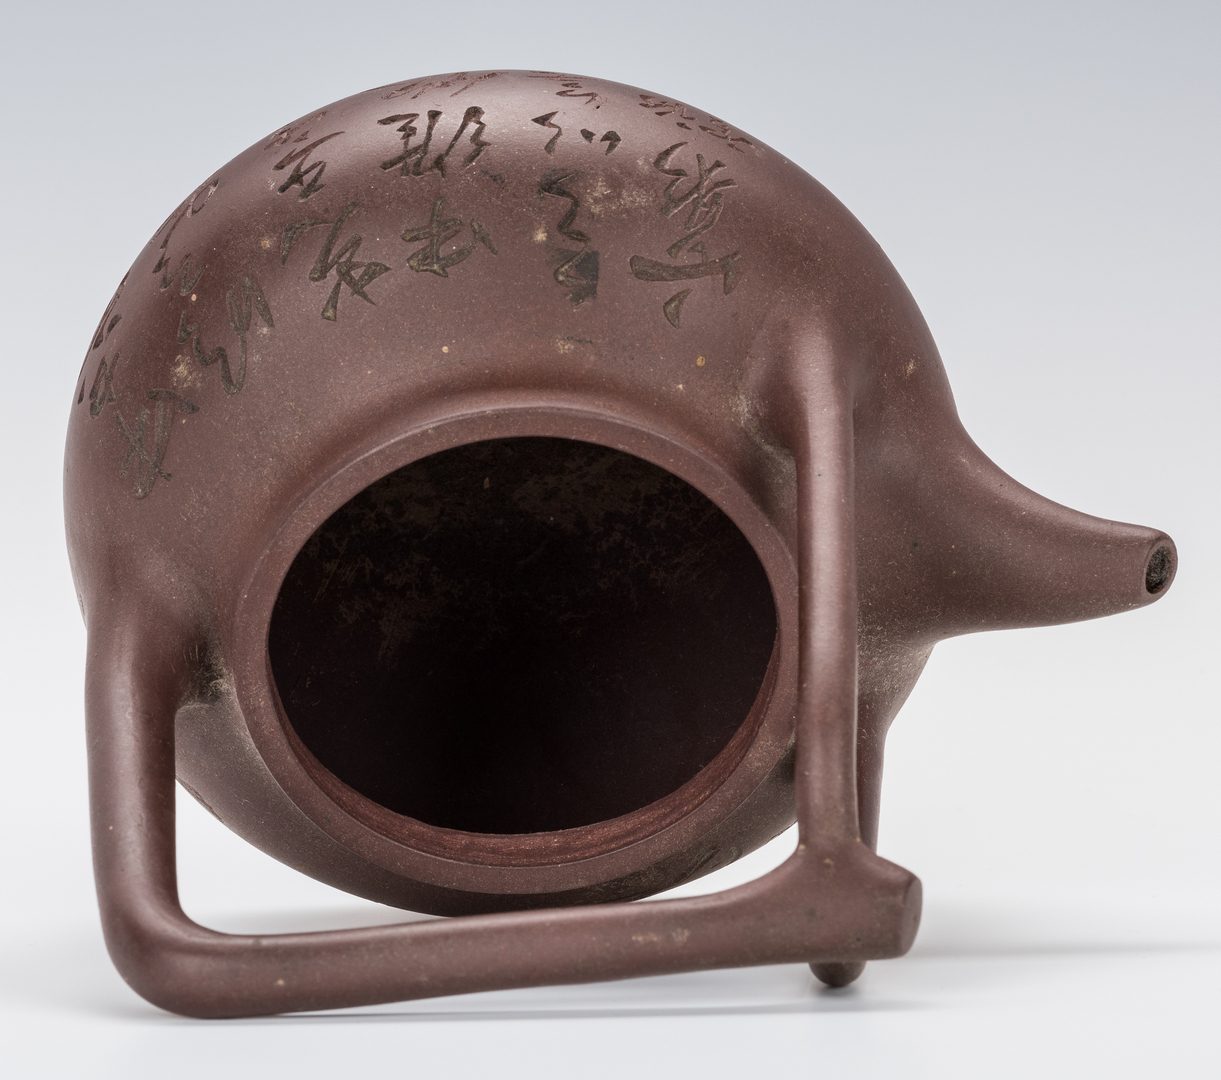 Lot 351: 4 Chinese Yixing Teapots w/ Inscriptions